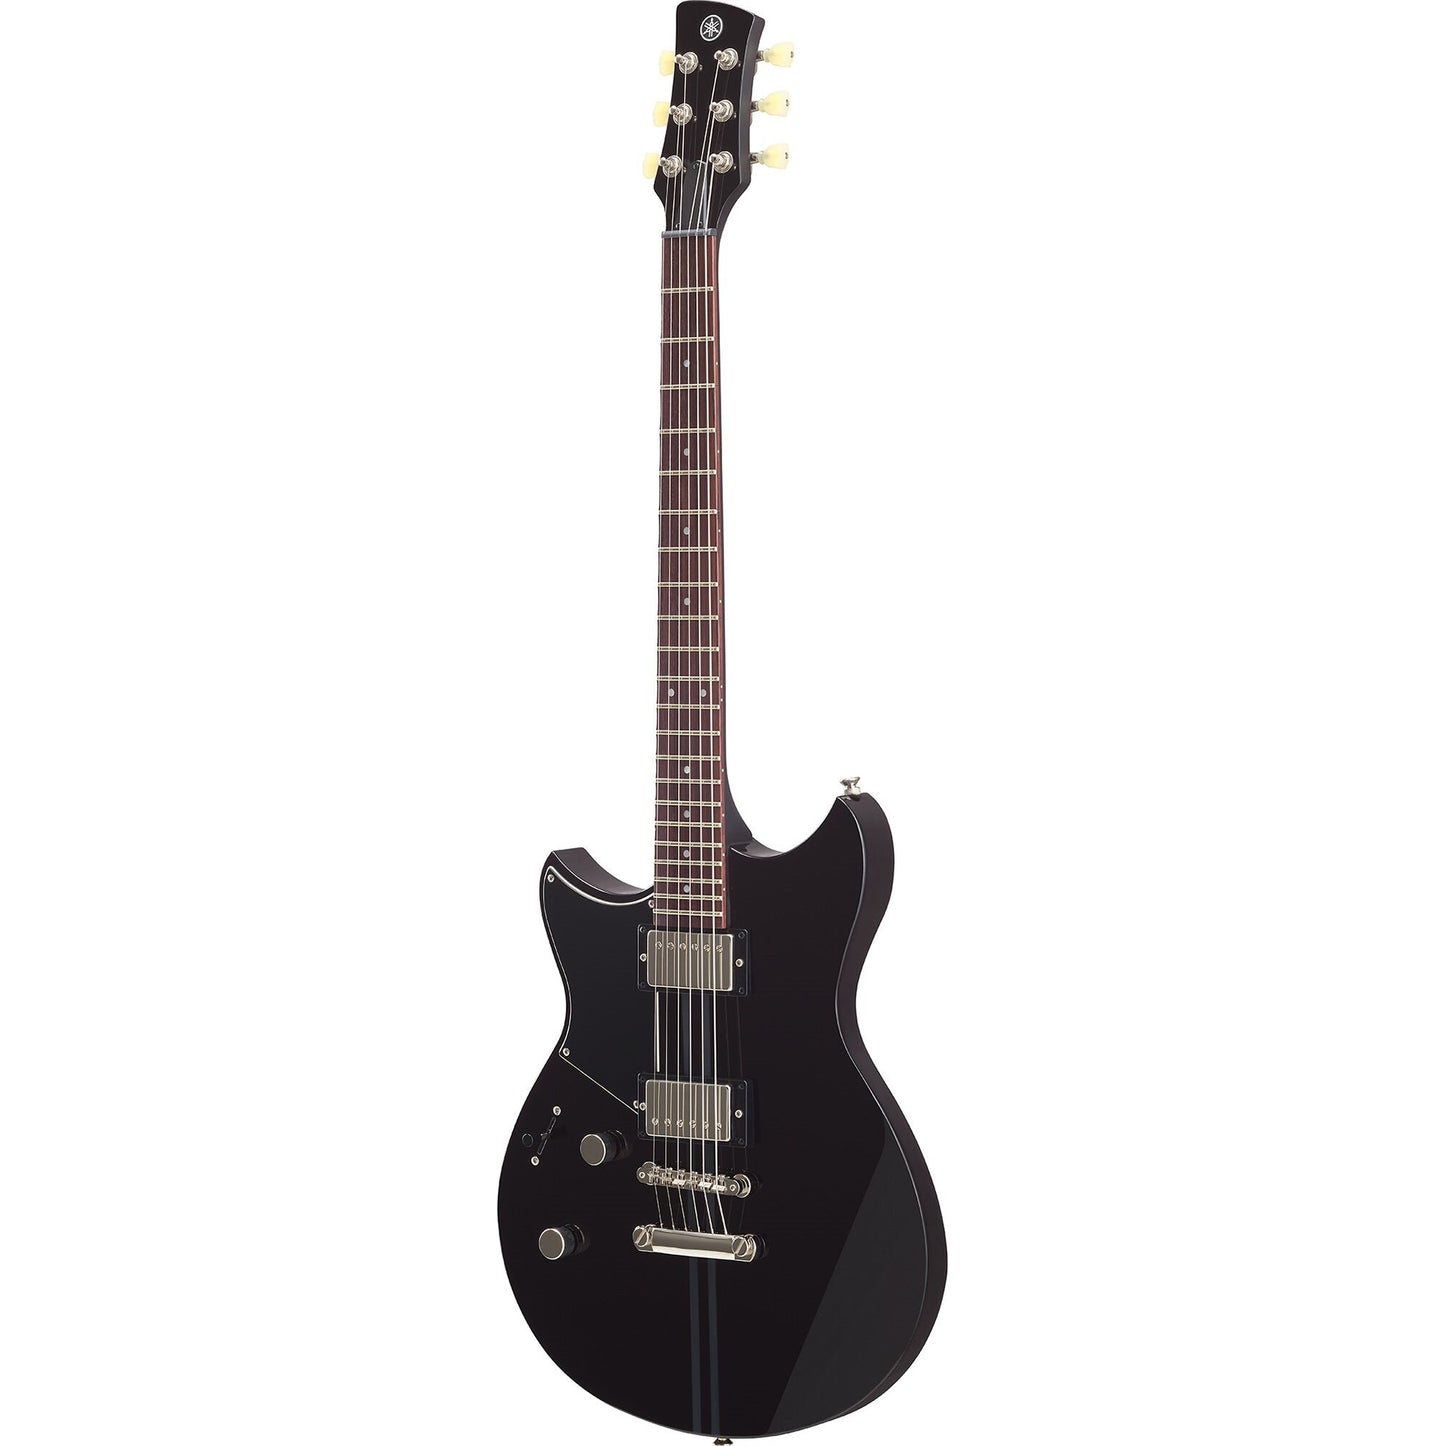 Yamaha Revstar RSE20LBL Left Handed Electric Guitar in Black, Guitar Only